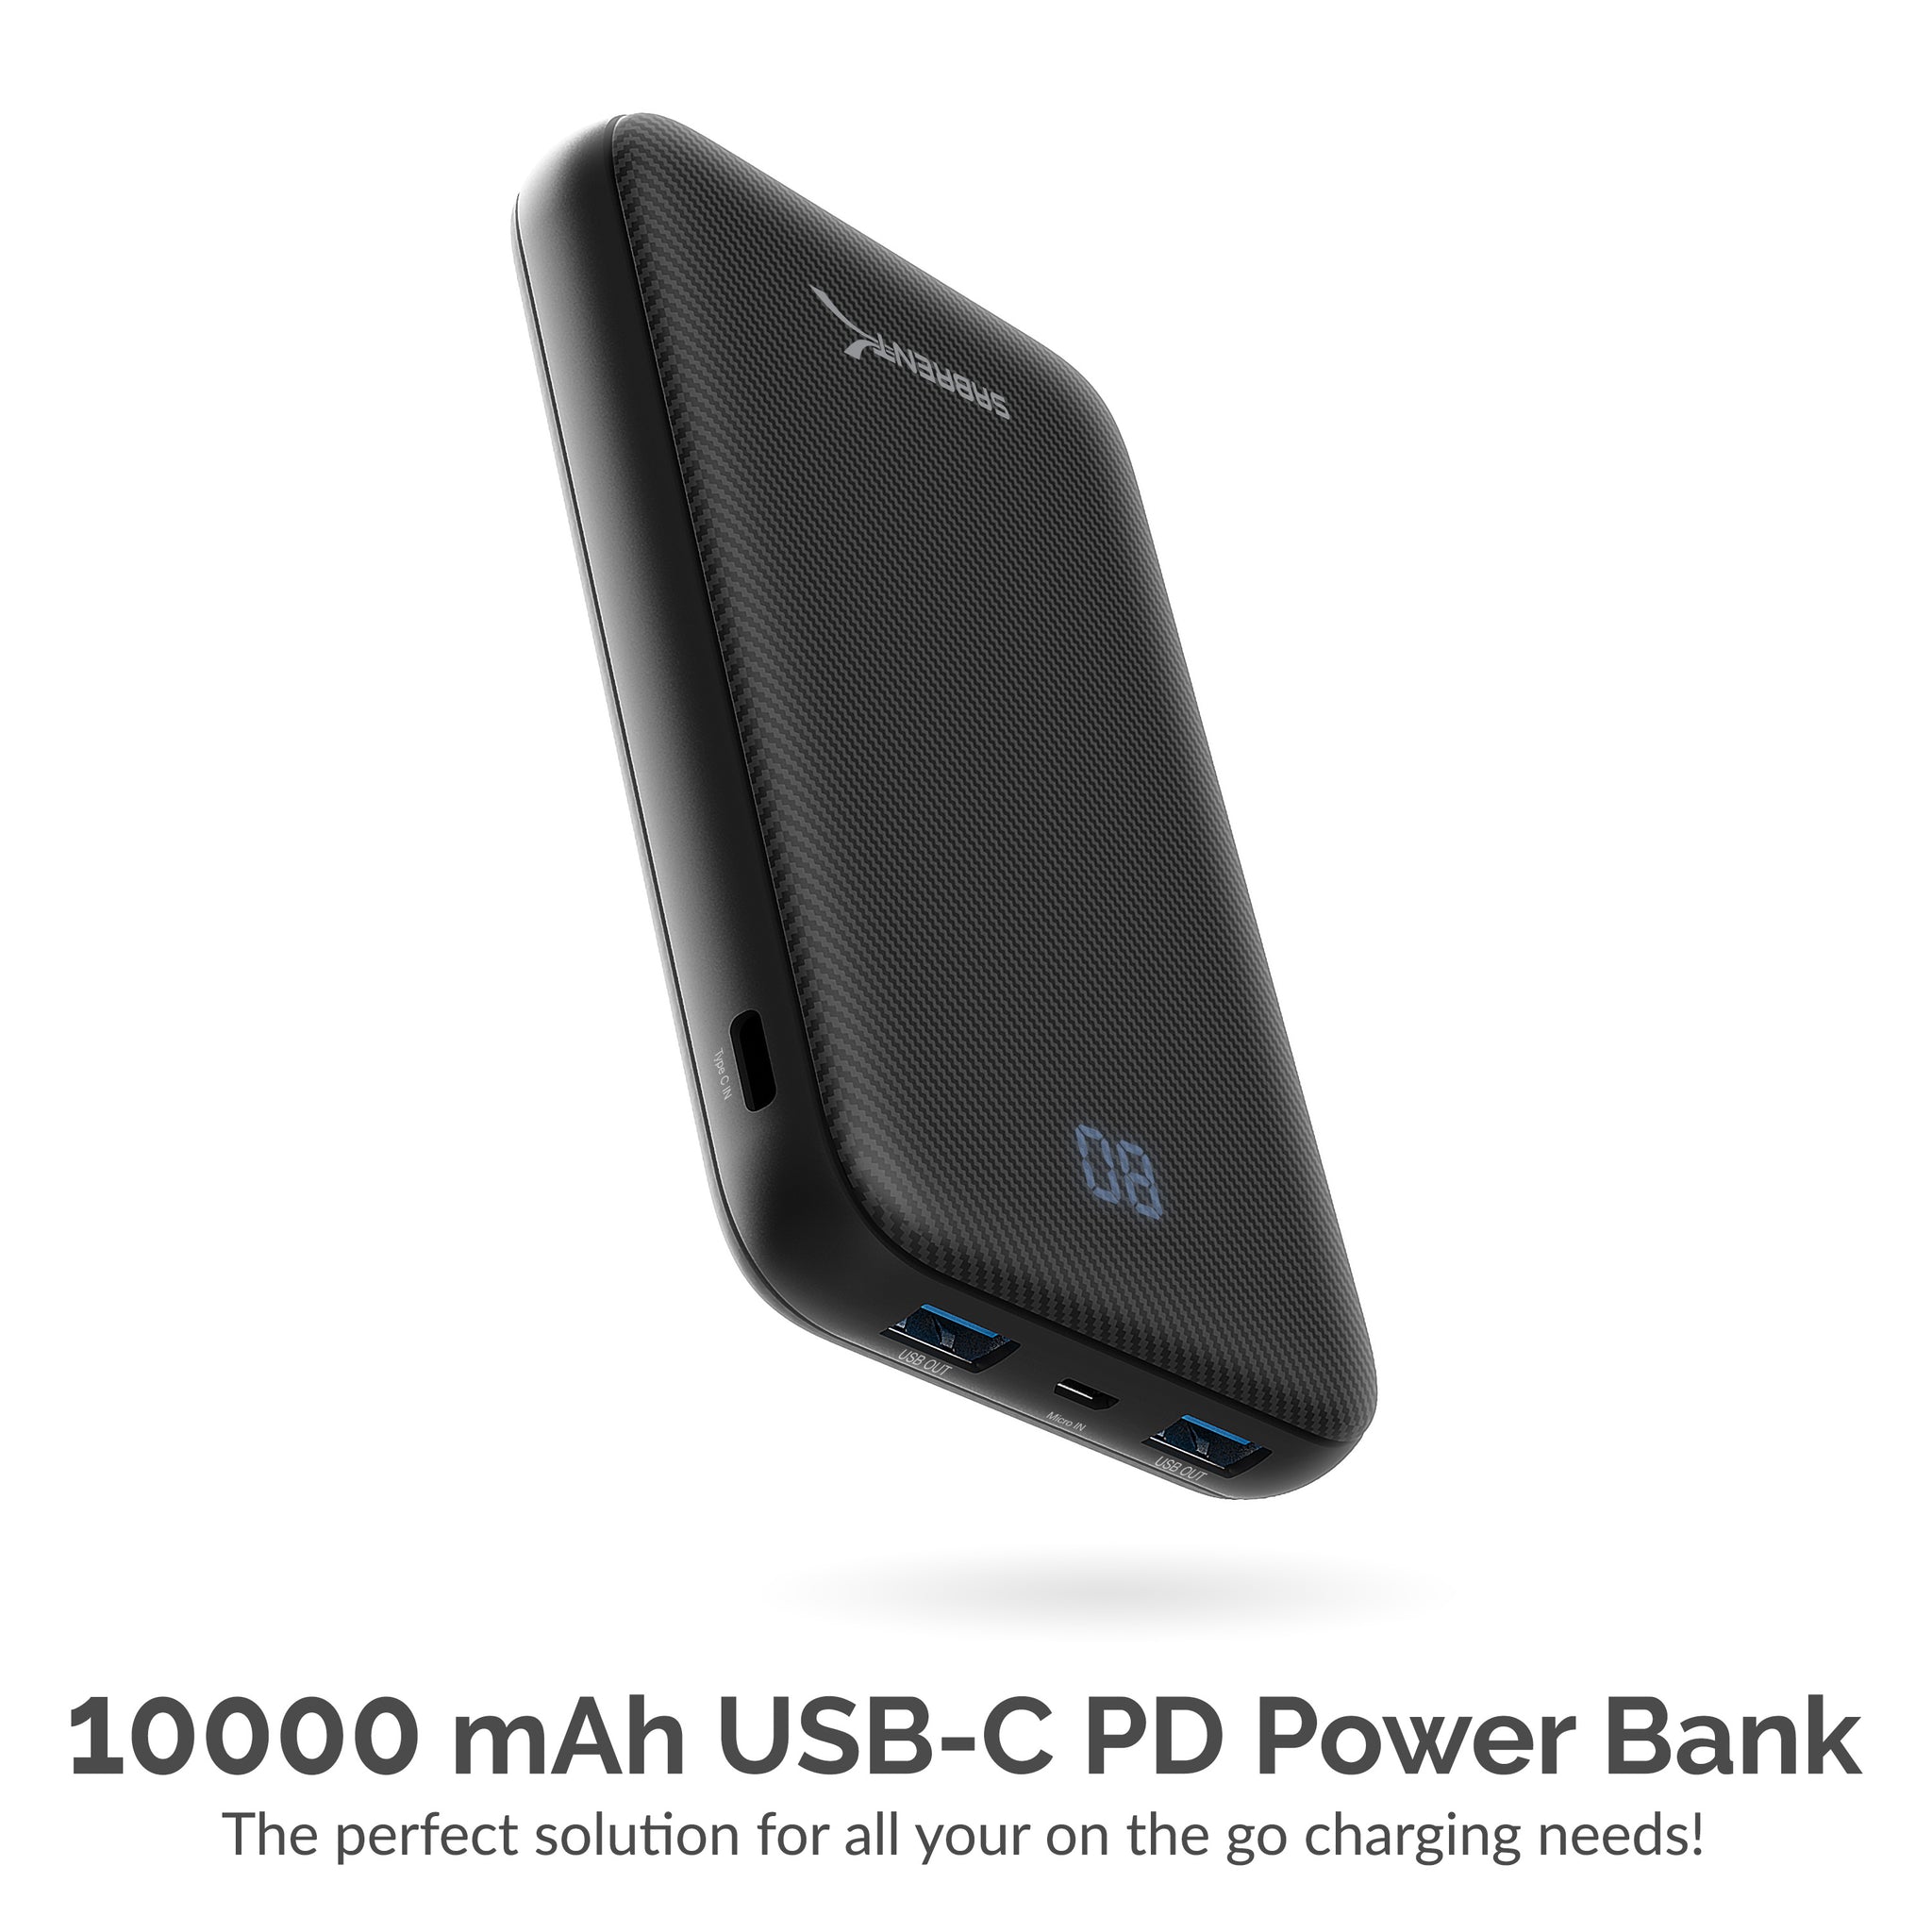 10,000 mAh Quick Charge USB 3.0 and USB-C power bank - Mobisun